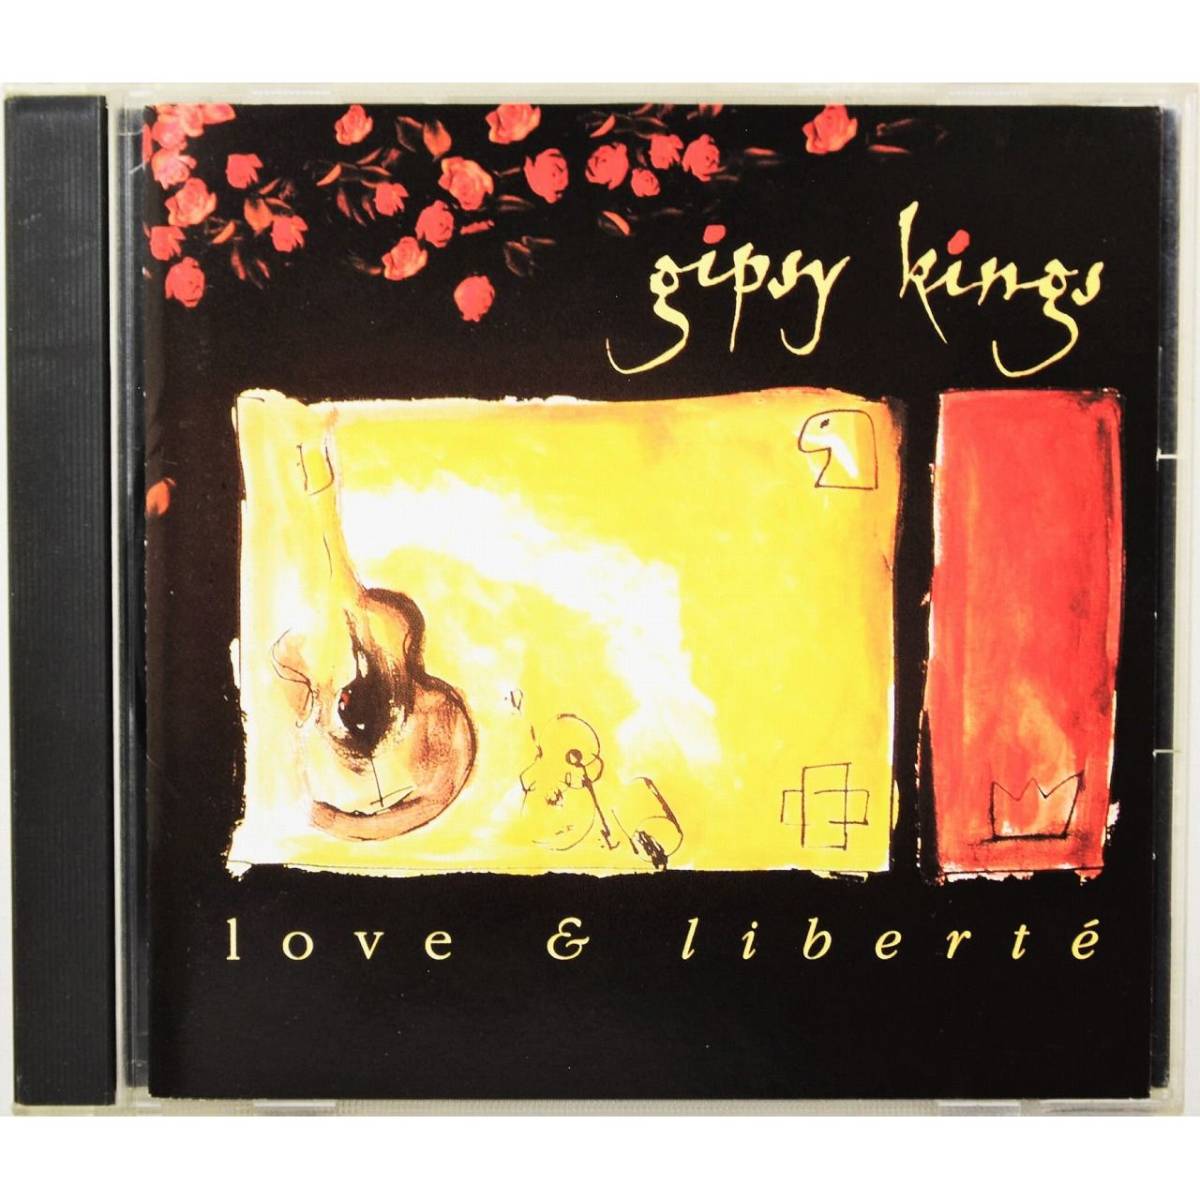 Gipsy Kings / Love & Liberte ◇ ジプシー・キングス / ラヴ & リベルテ ◇ ニコラ・レイエス ◇ 国内盤 ◇_画像1